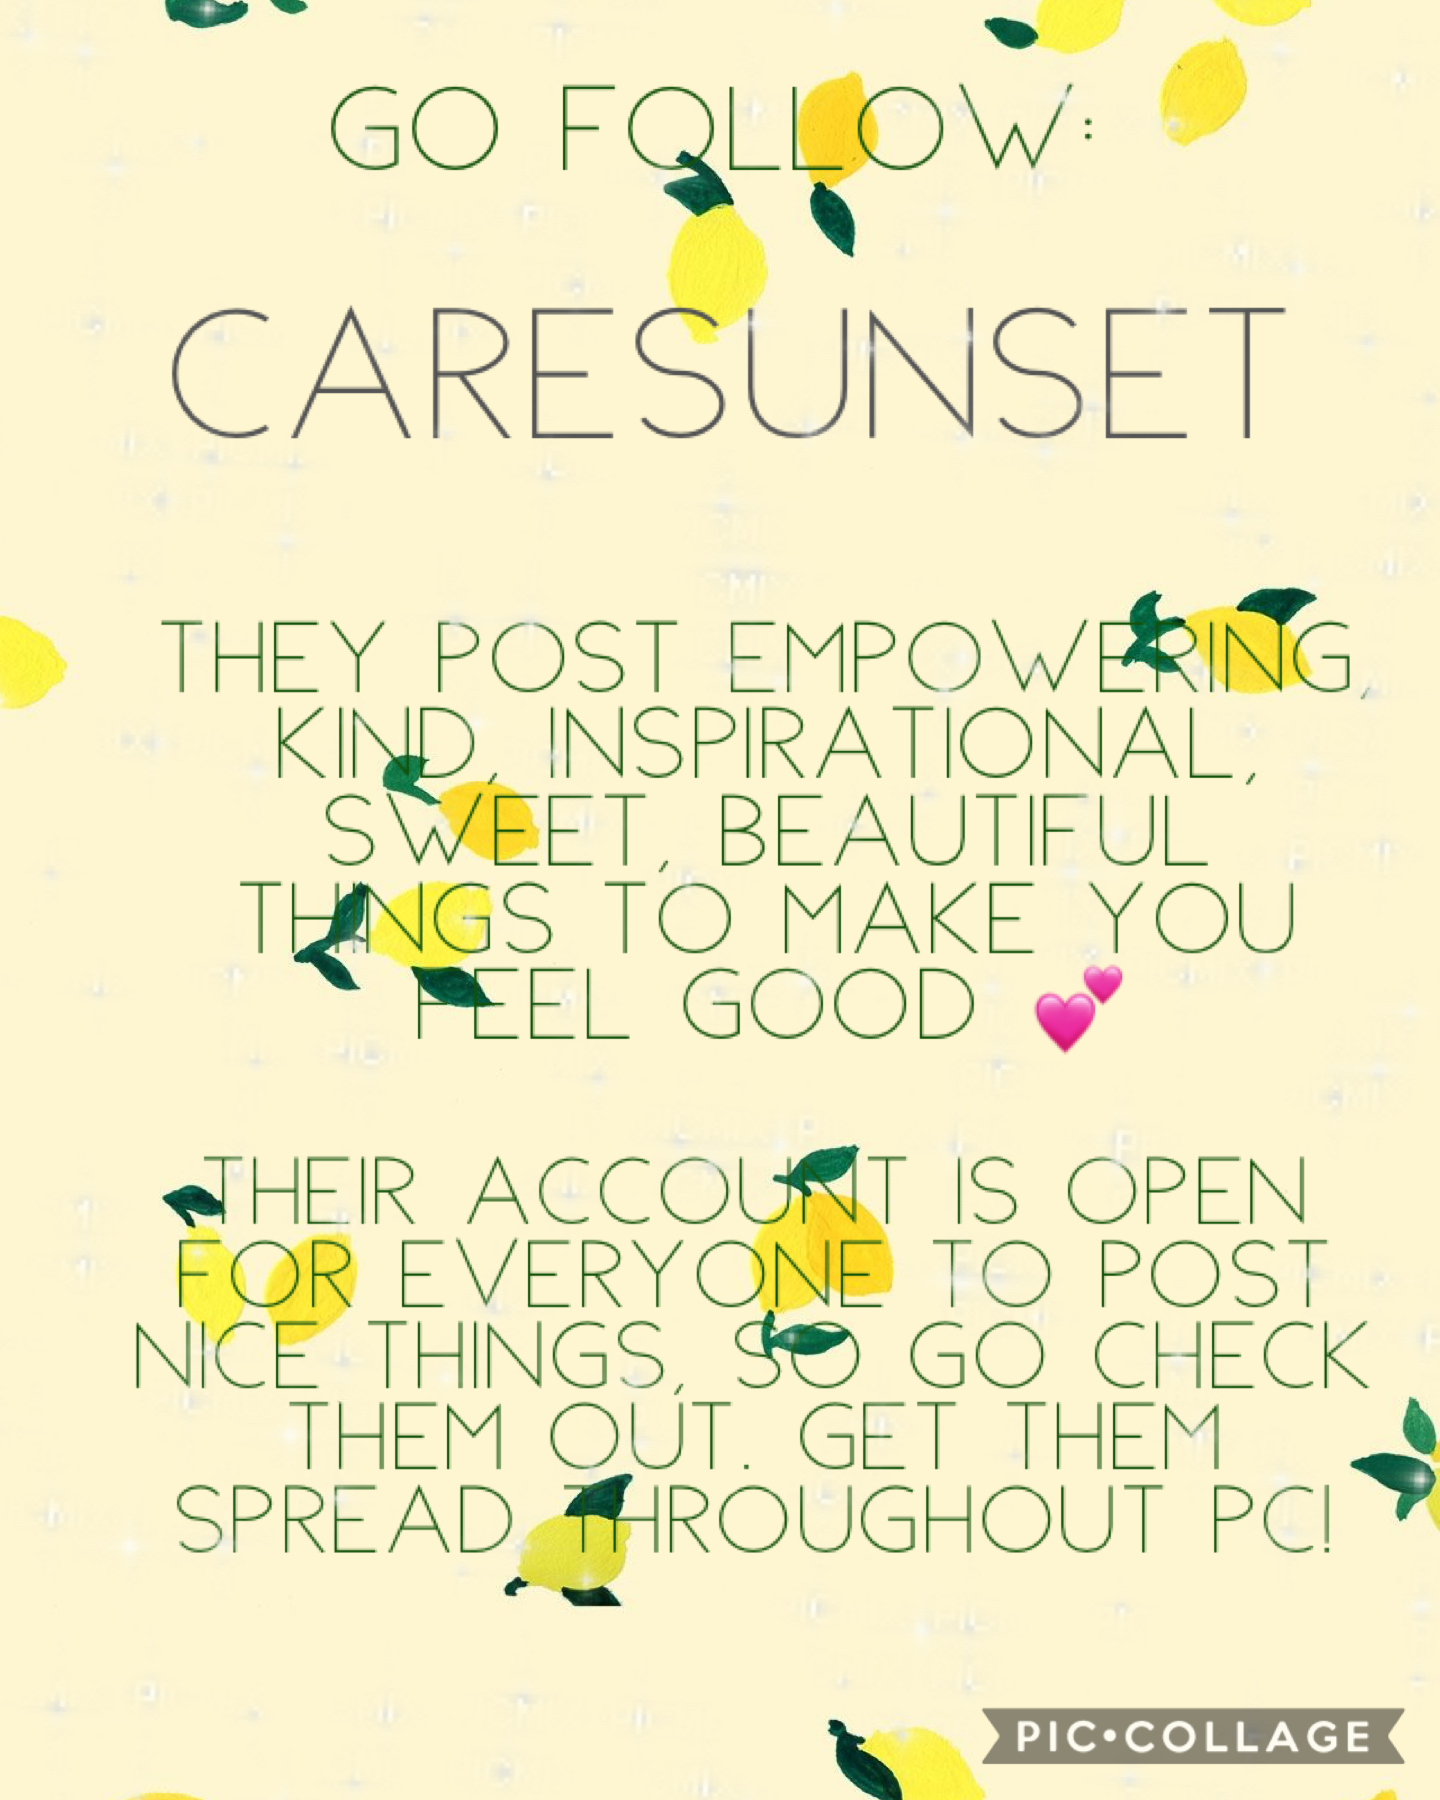 Caresunset 💕 Their next 10 followers I will follow! So go follow! 😃 